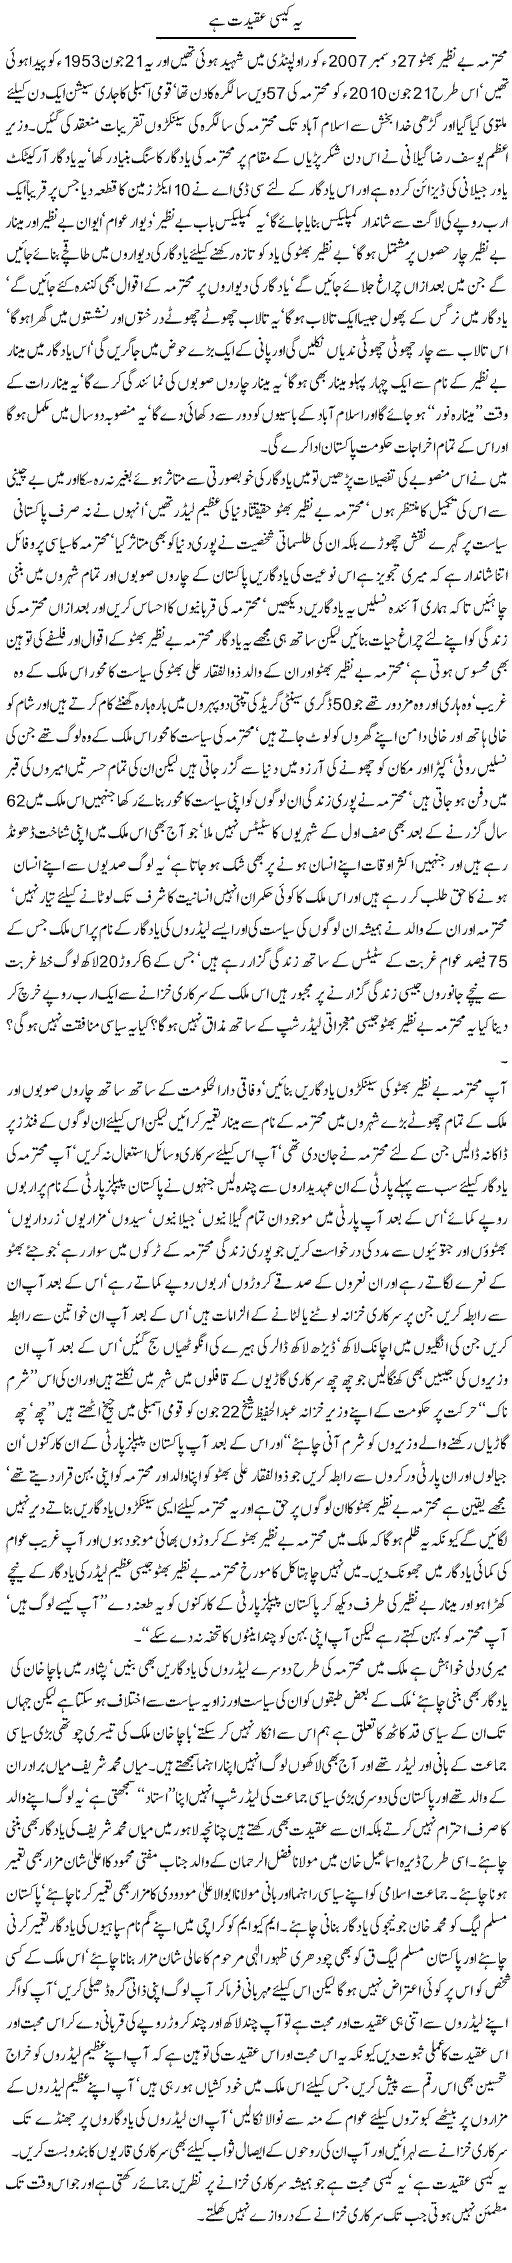 Kasi Aqeedat Express Column Javed Chaudhry 24 June 2010